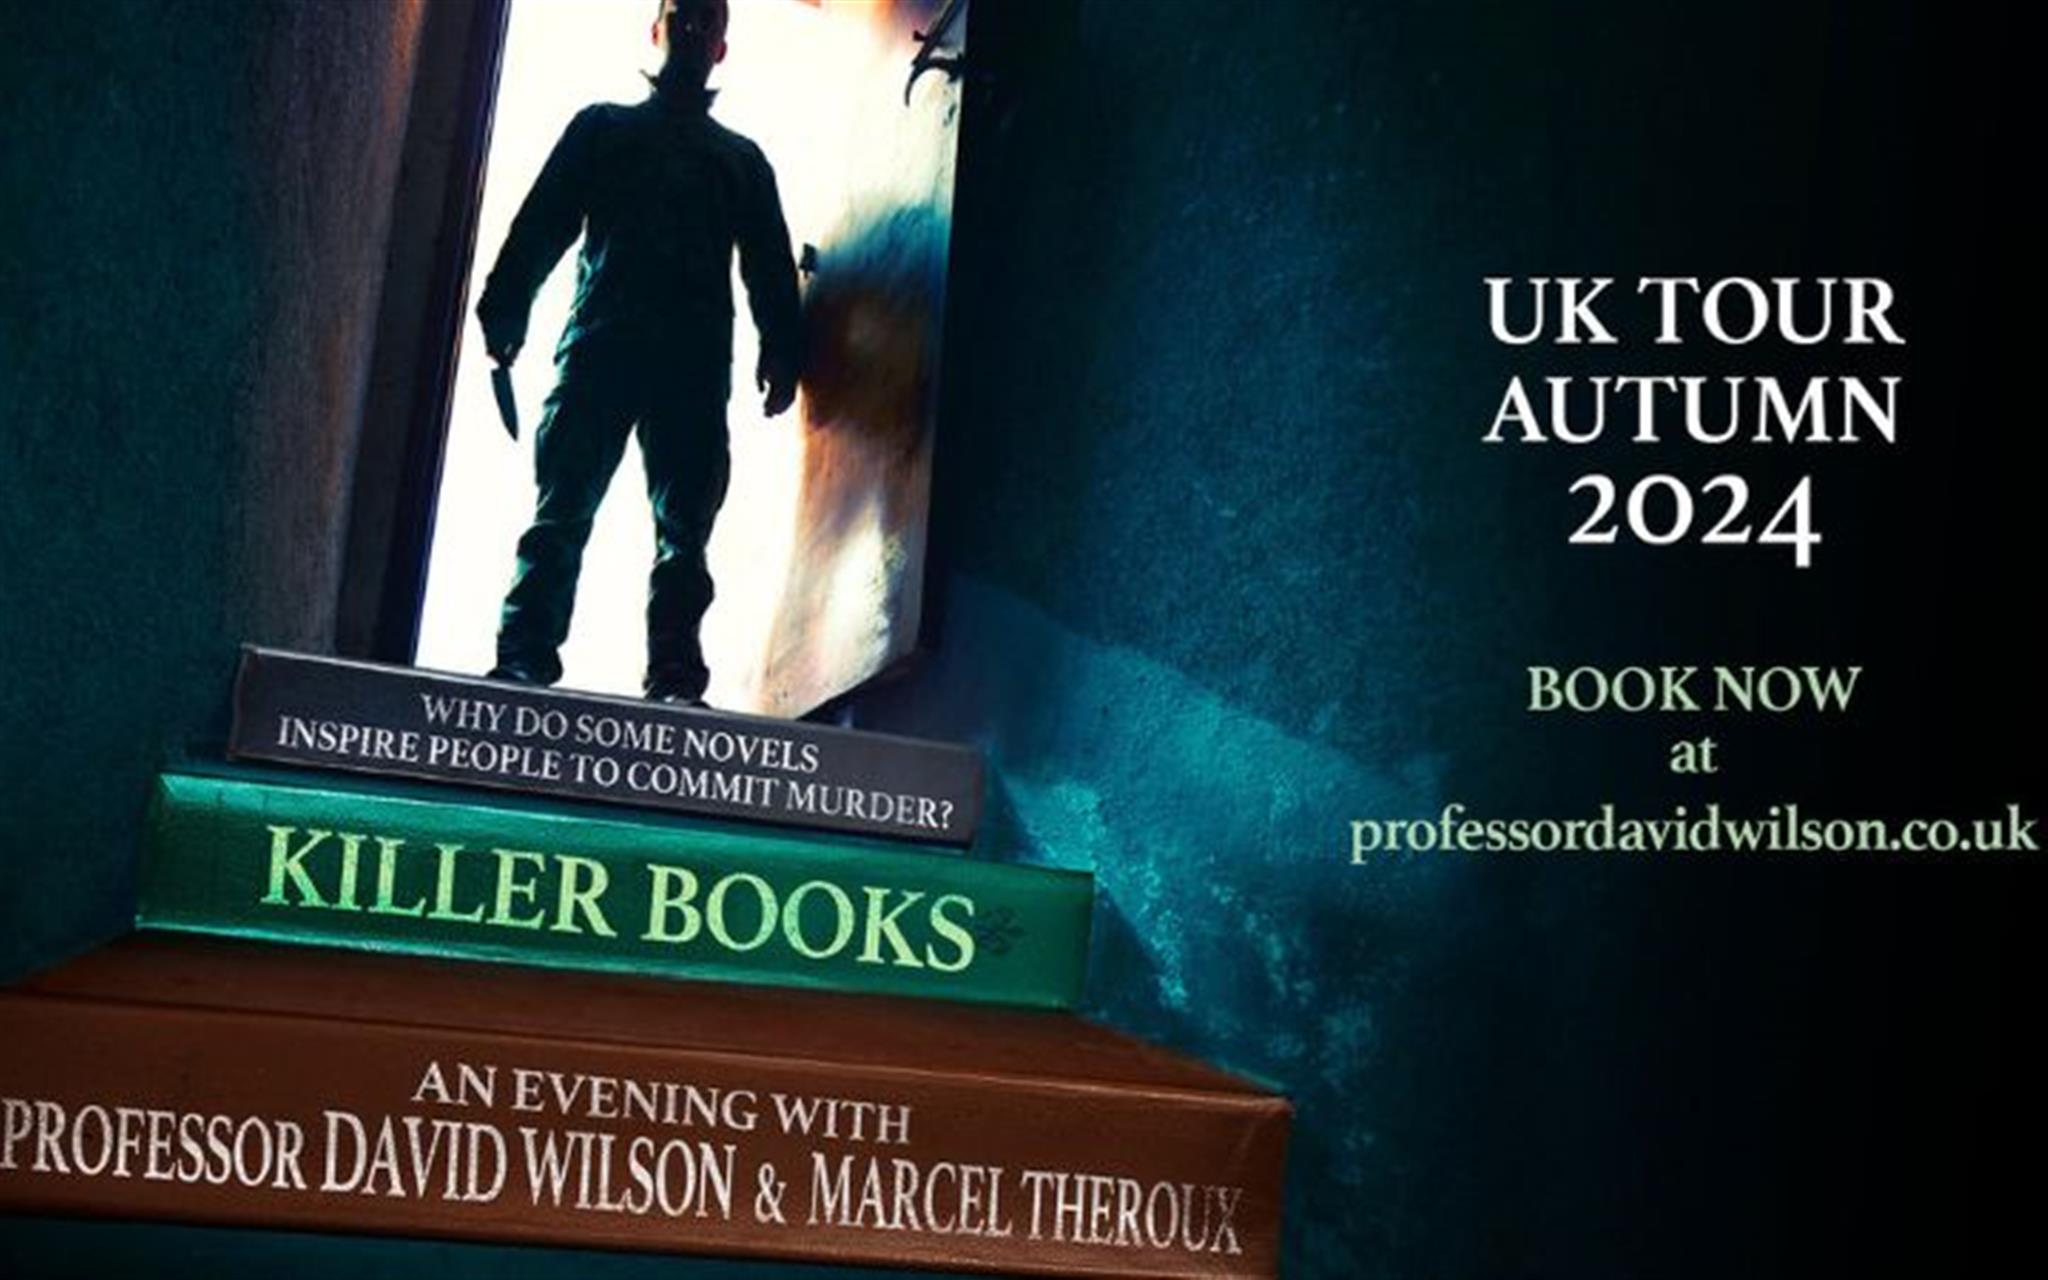 Professor David Wilson & Marcel Theroux - Killer Books image